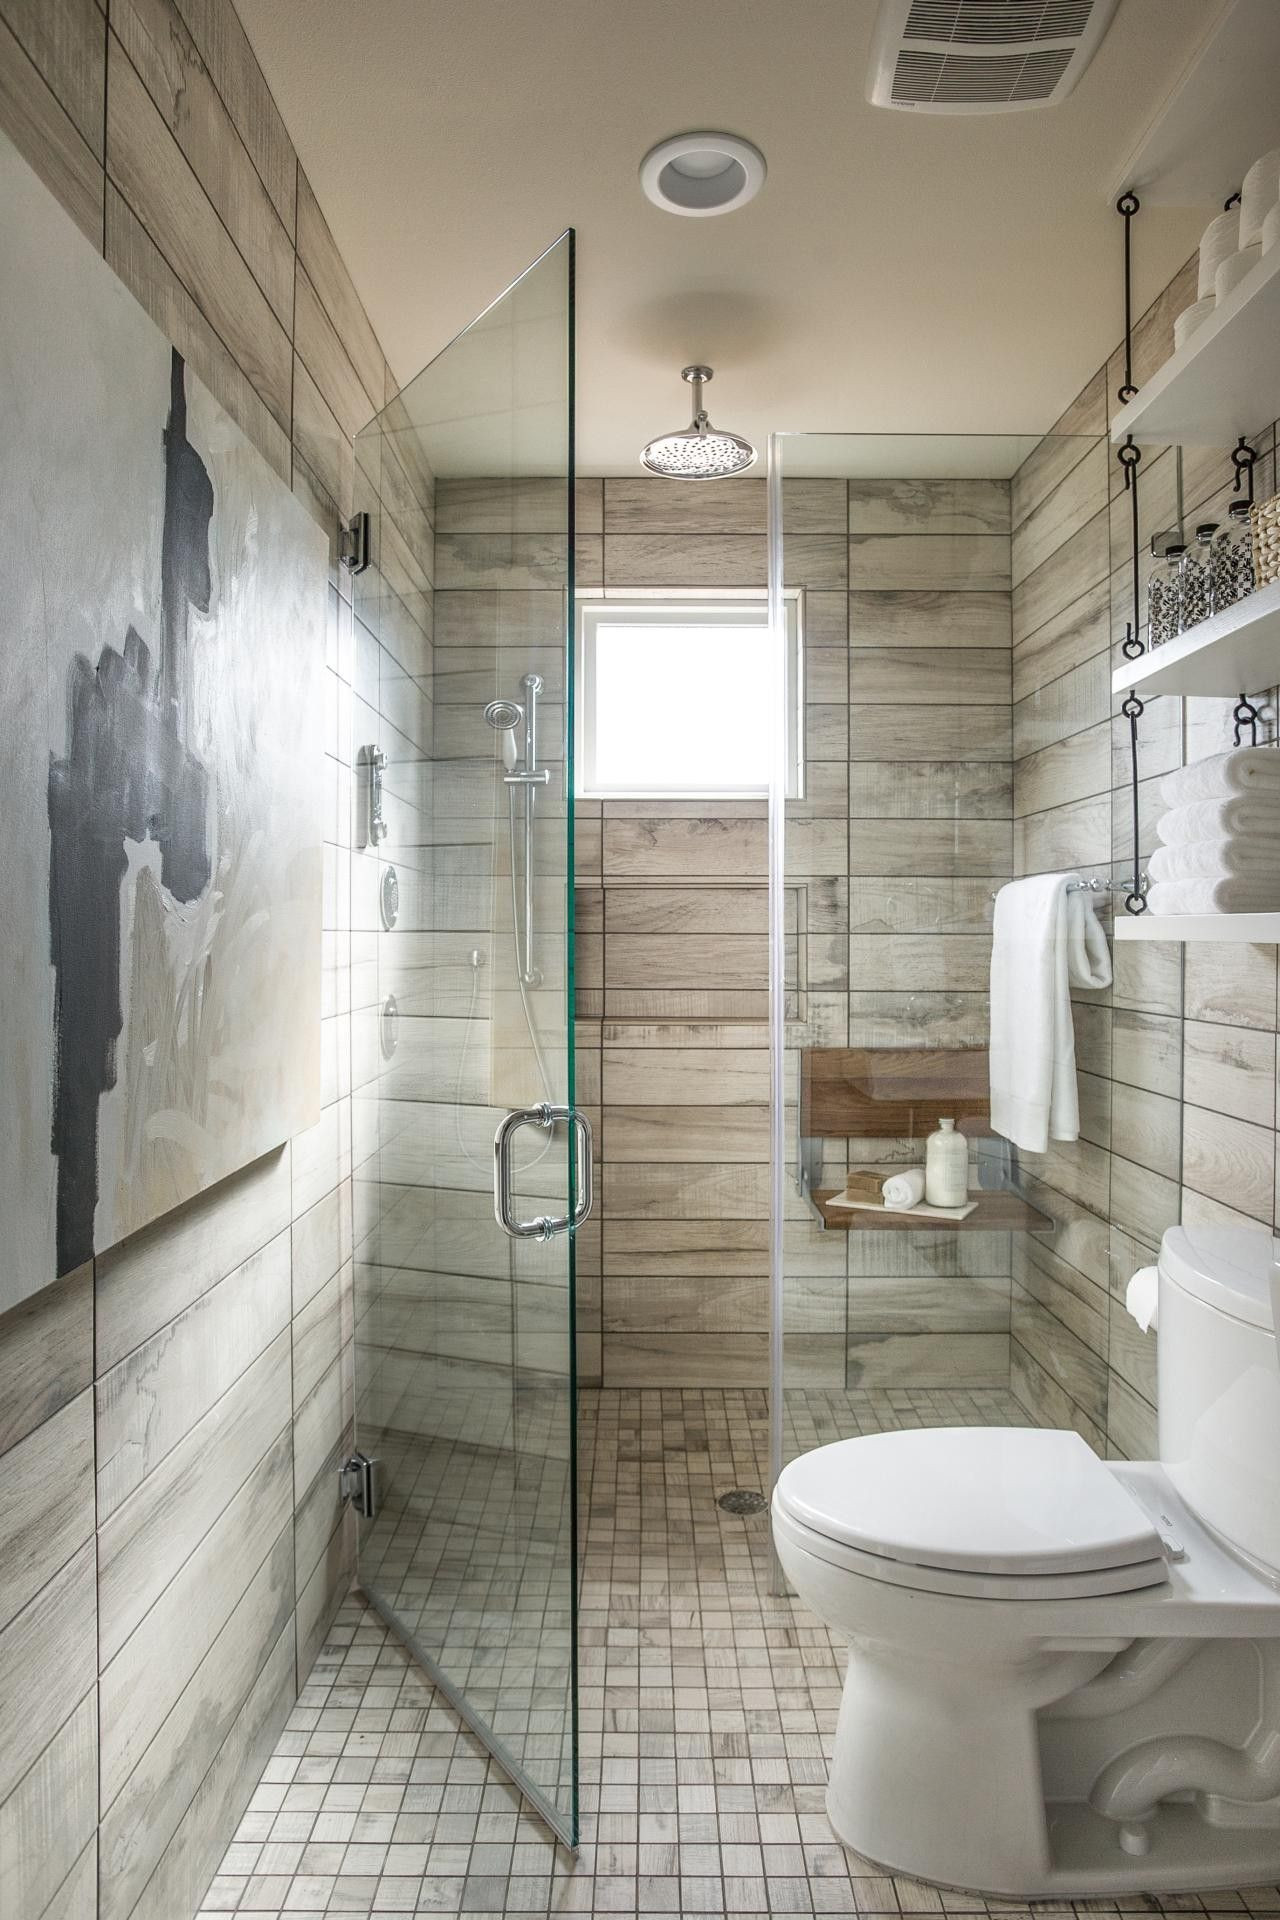 Tiled Bathroom Floors
 15 Wood Tile Showers For Your Bathroom